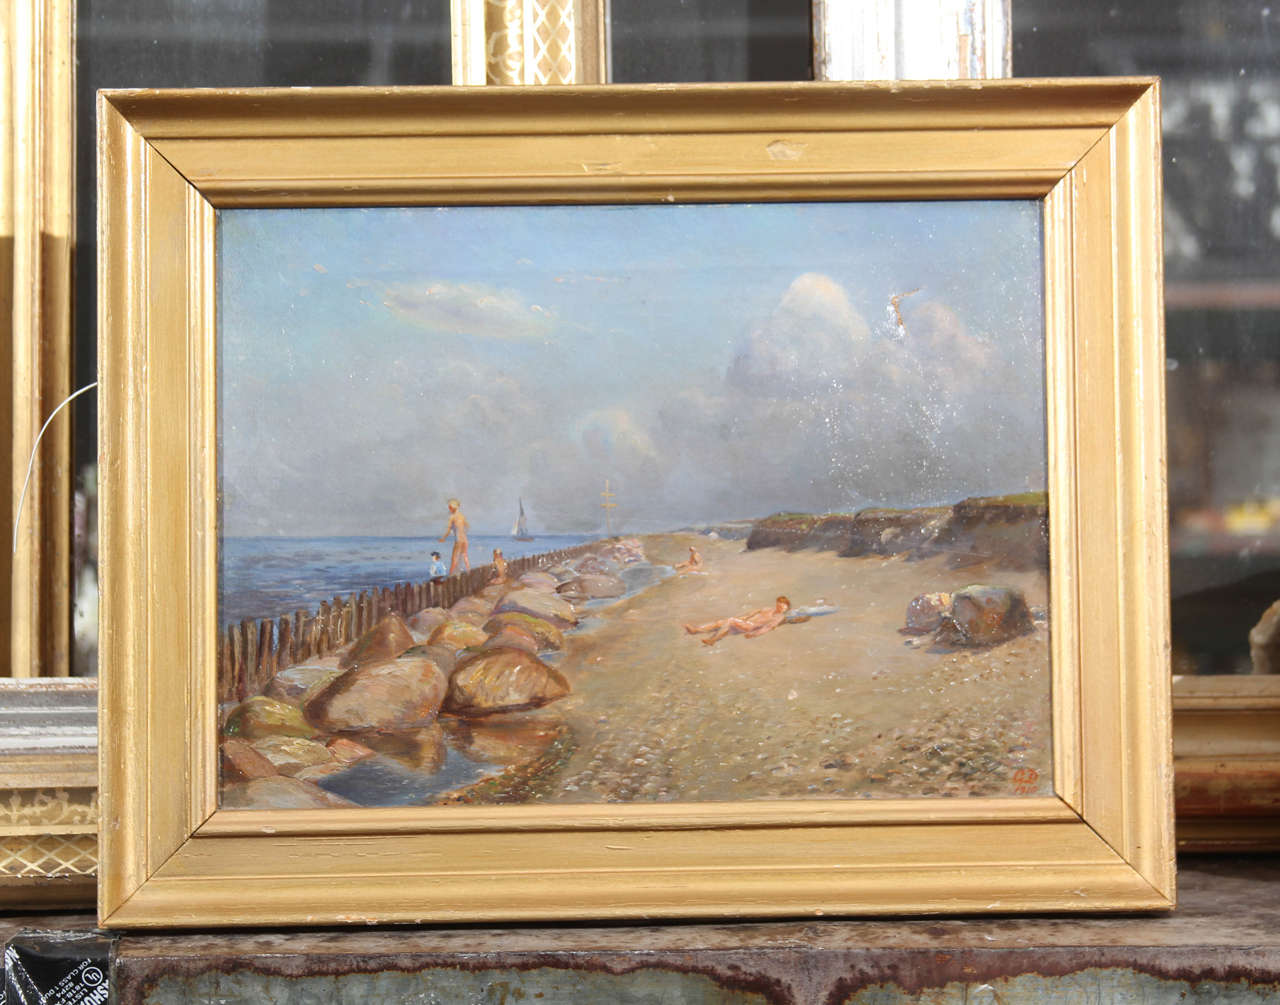 Nude beach painting, circa 1910 by Danish artist.